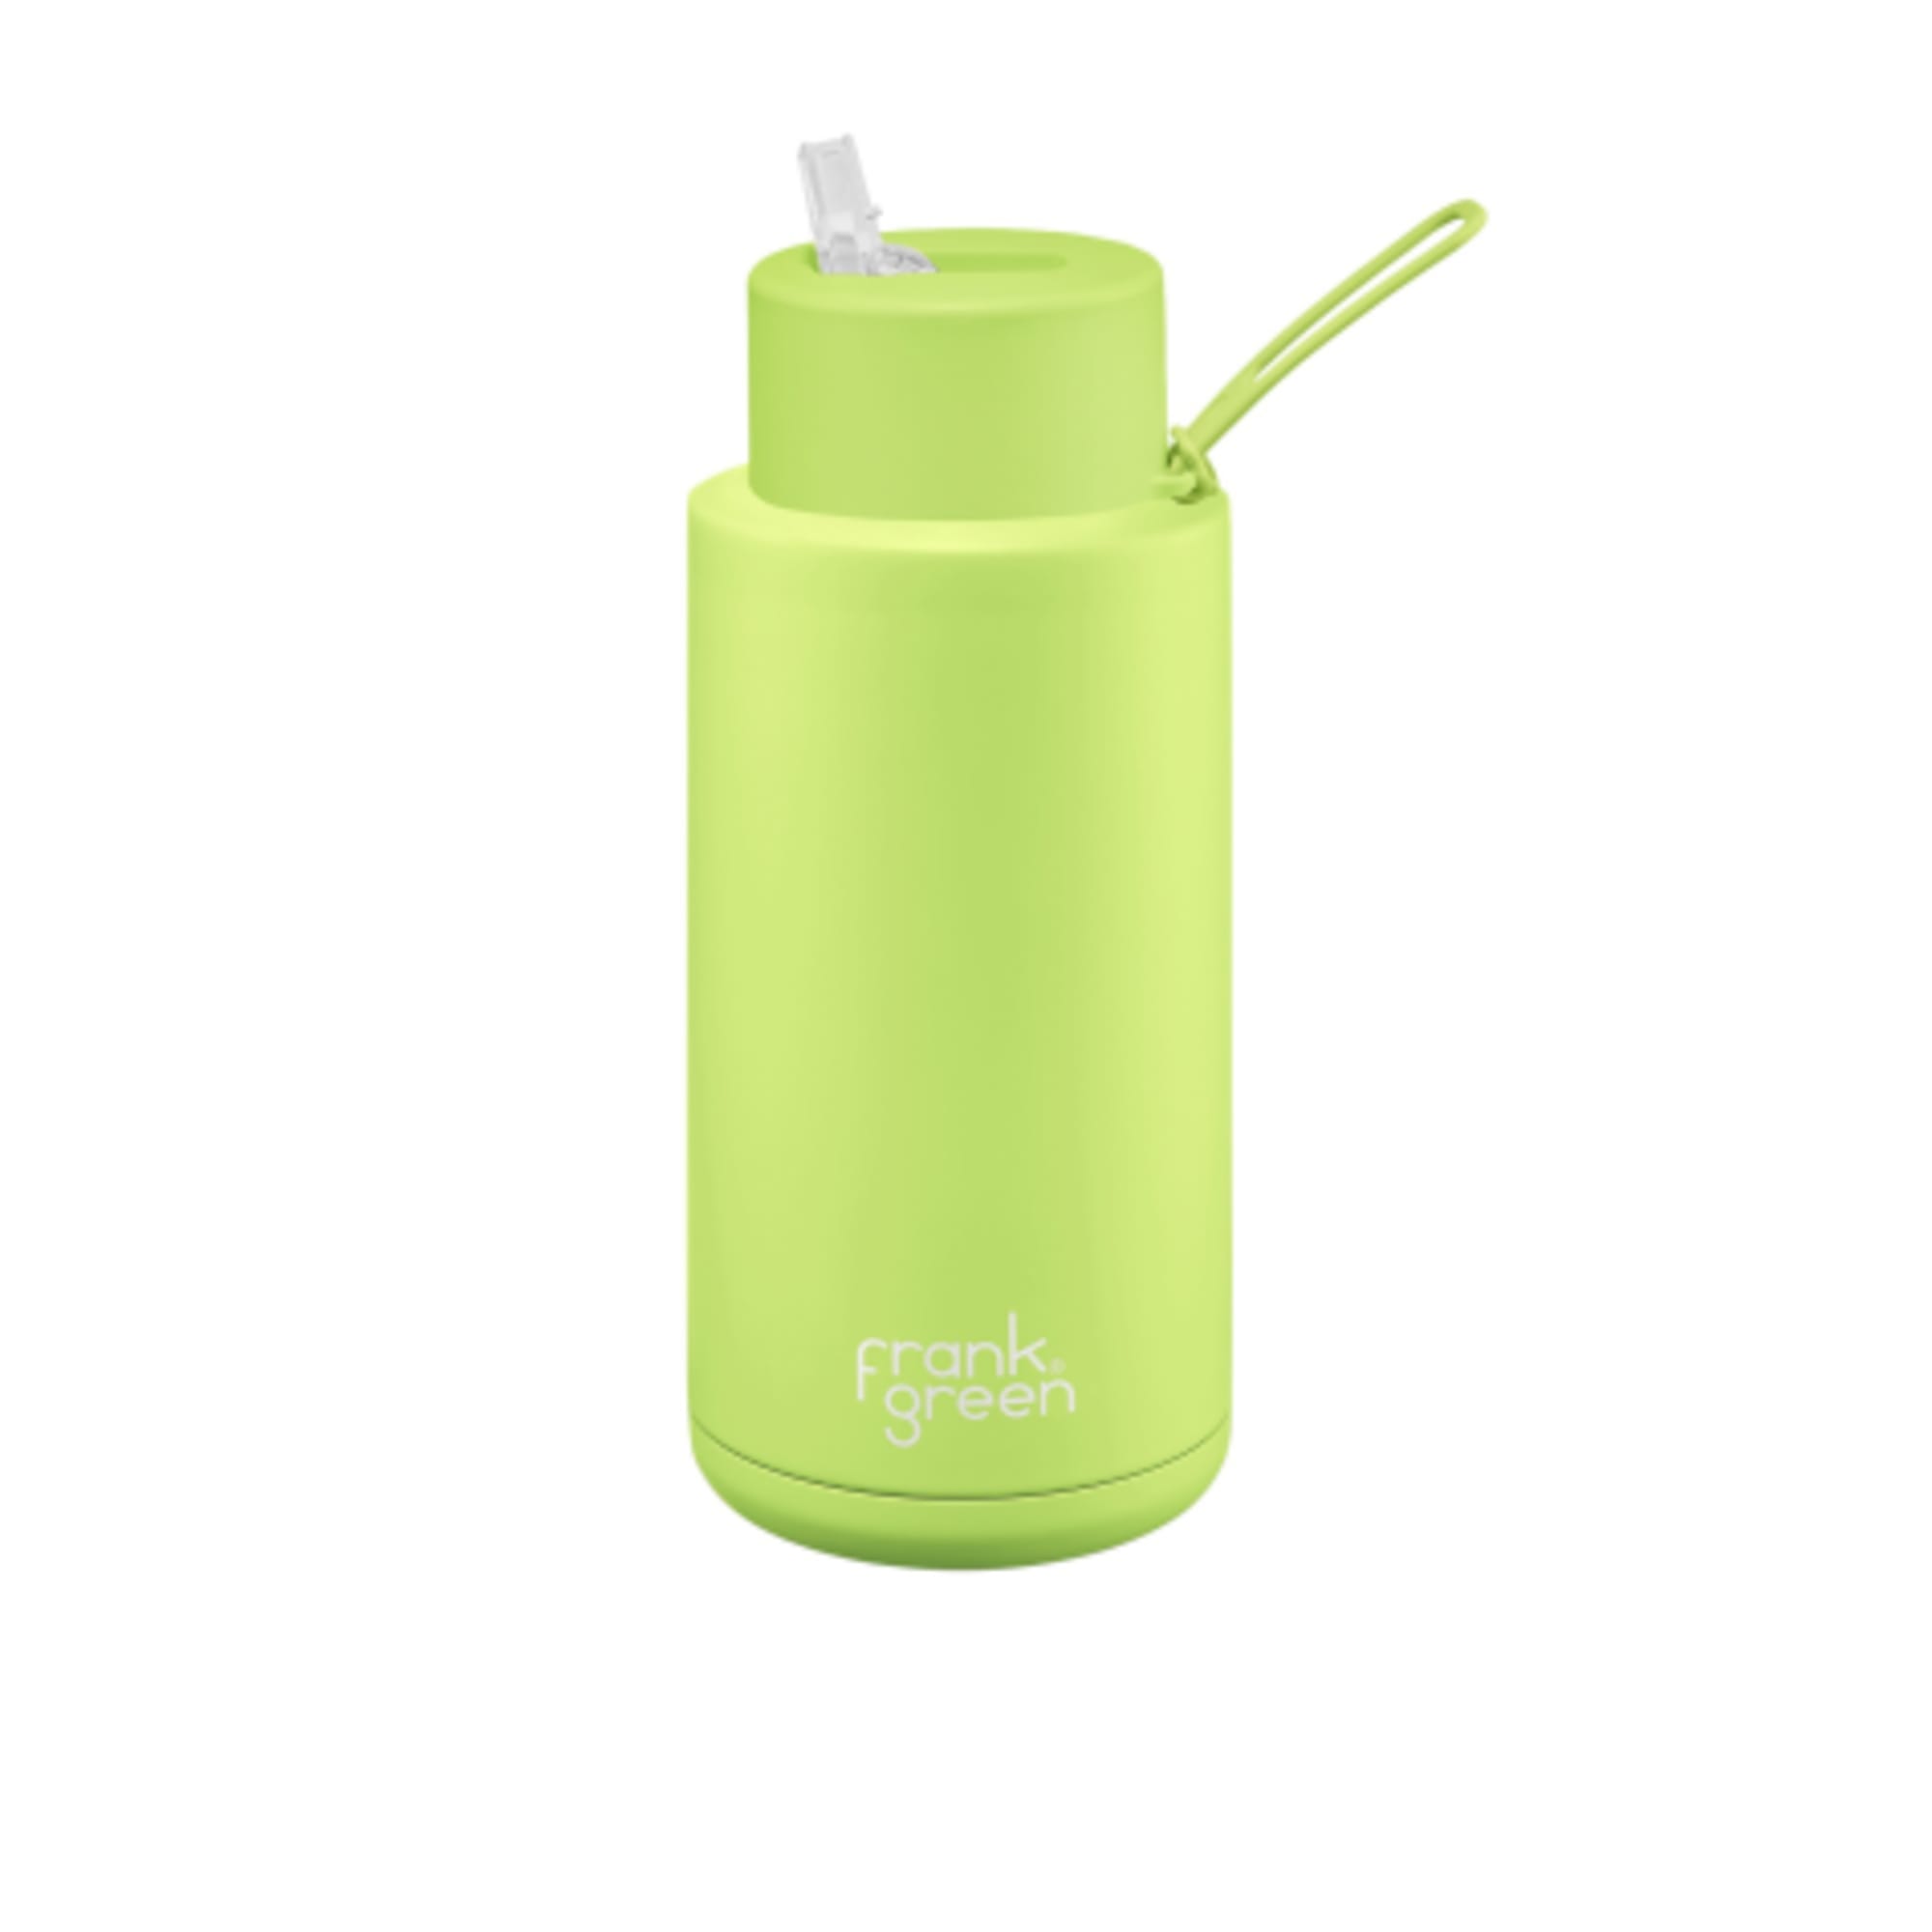 frank green Ceramic Reusable Bottle with Straw Lid, 34oz Capacity (Khaki)